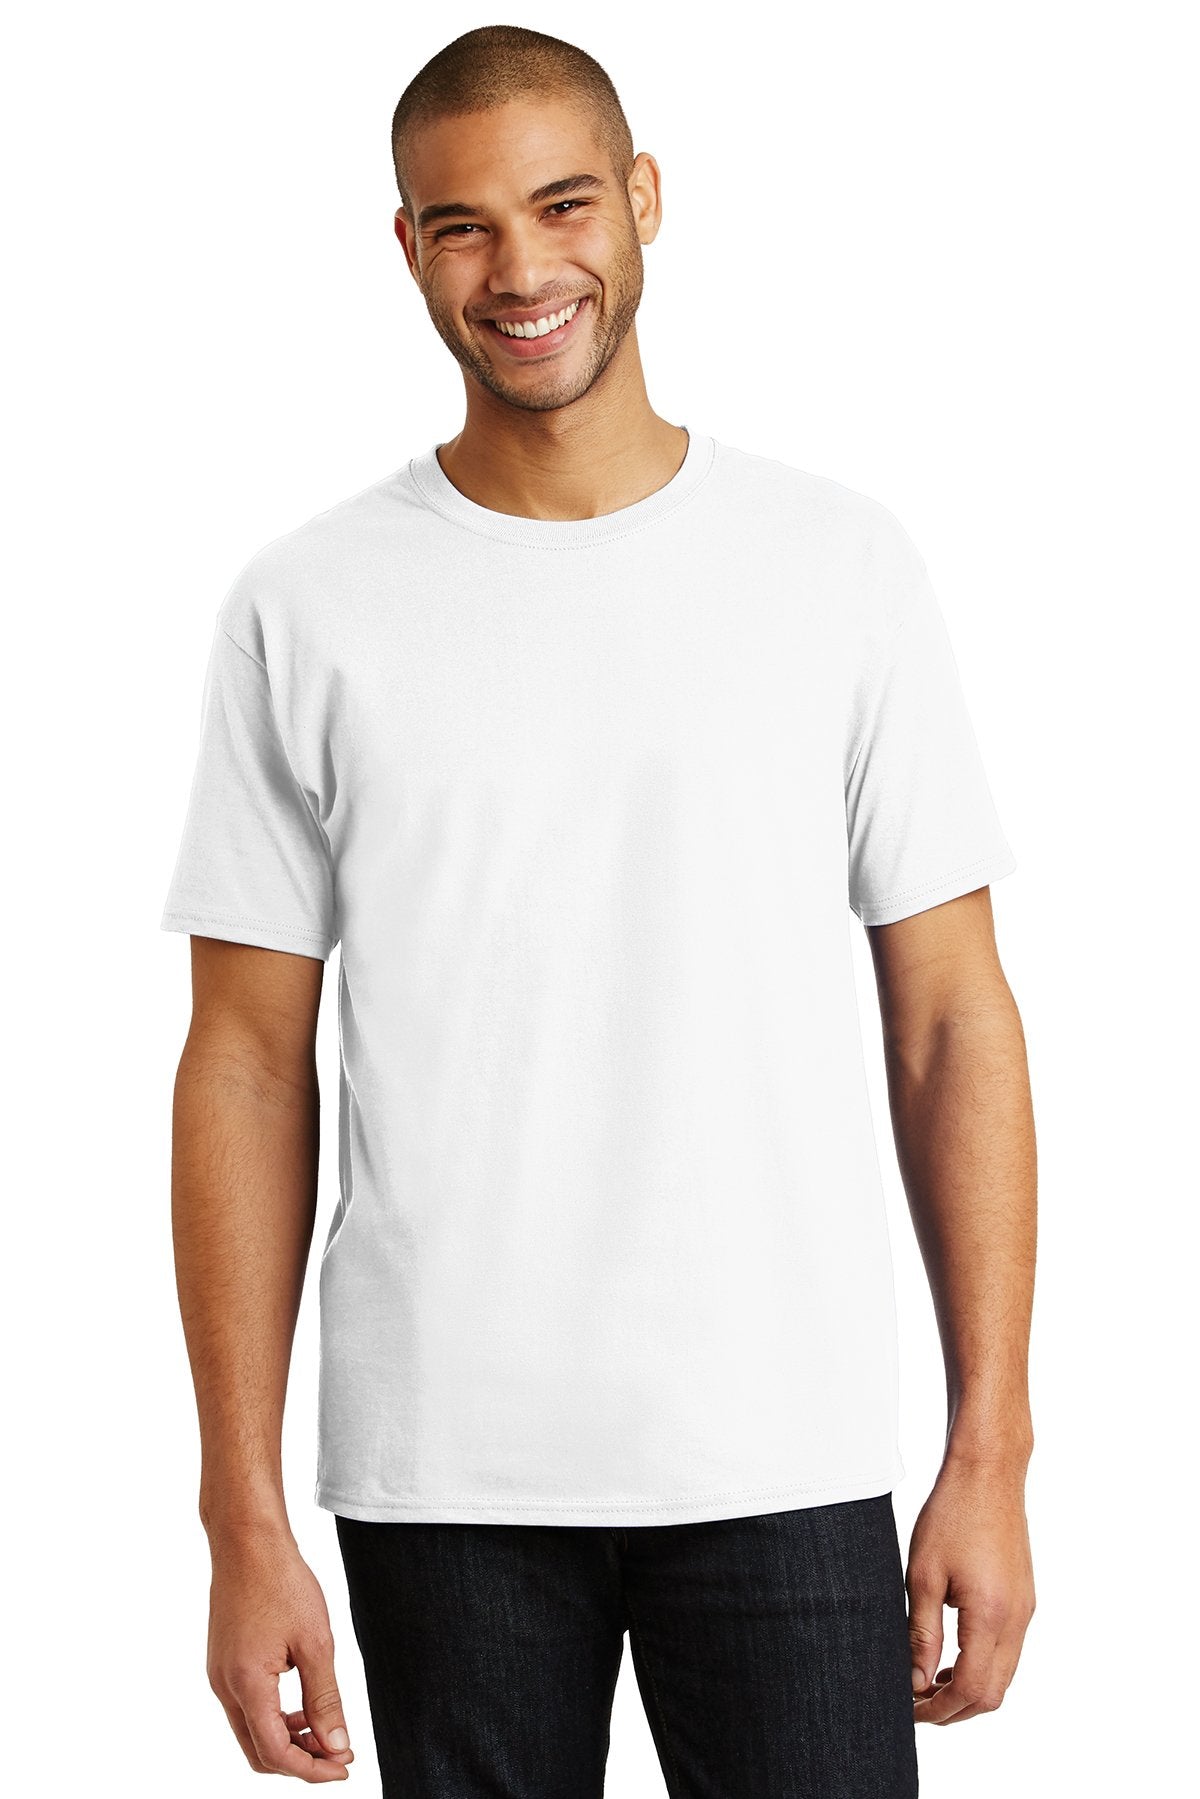 hanes tagless cotton t shirt 5250 white